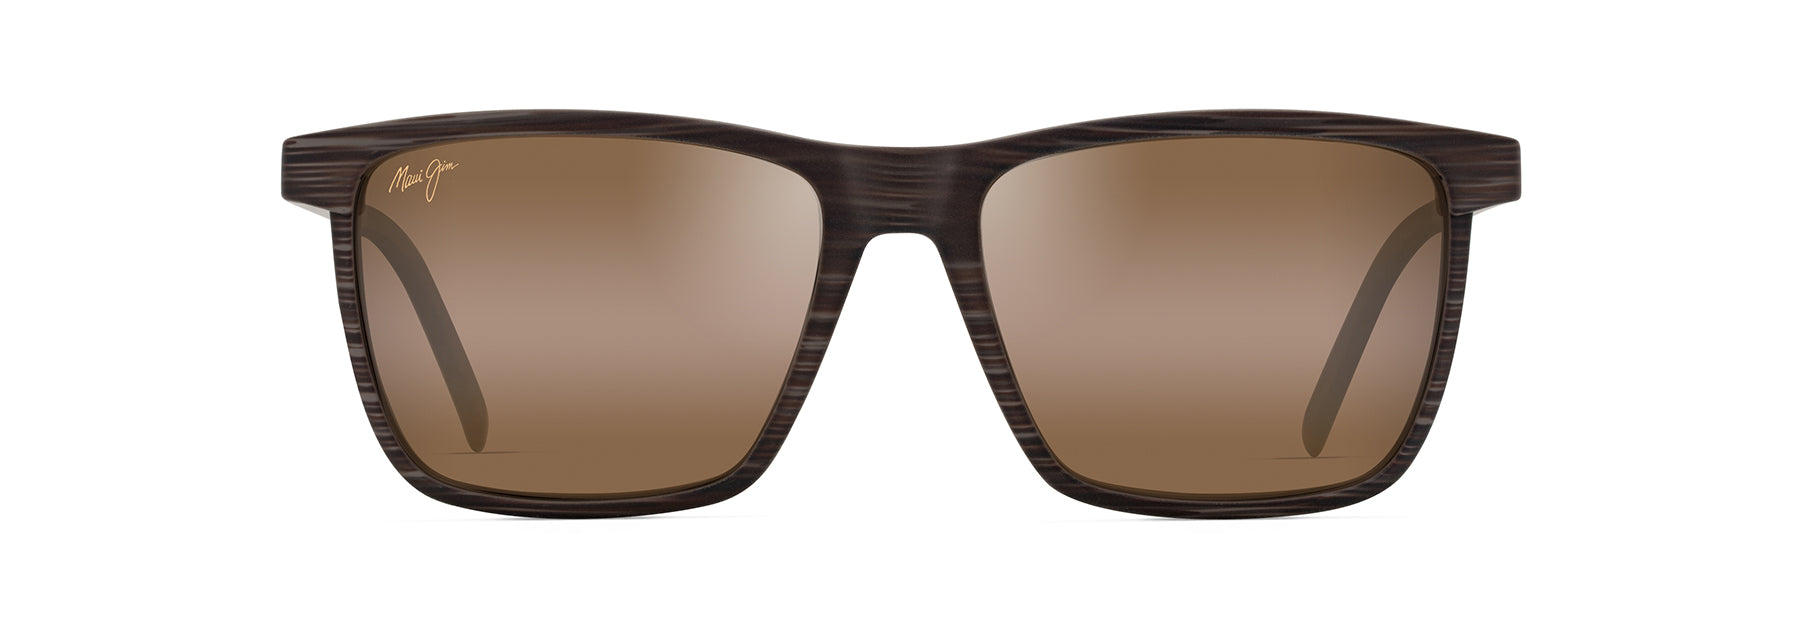 Maui Jim One Way Sunglasses – American Sunglass